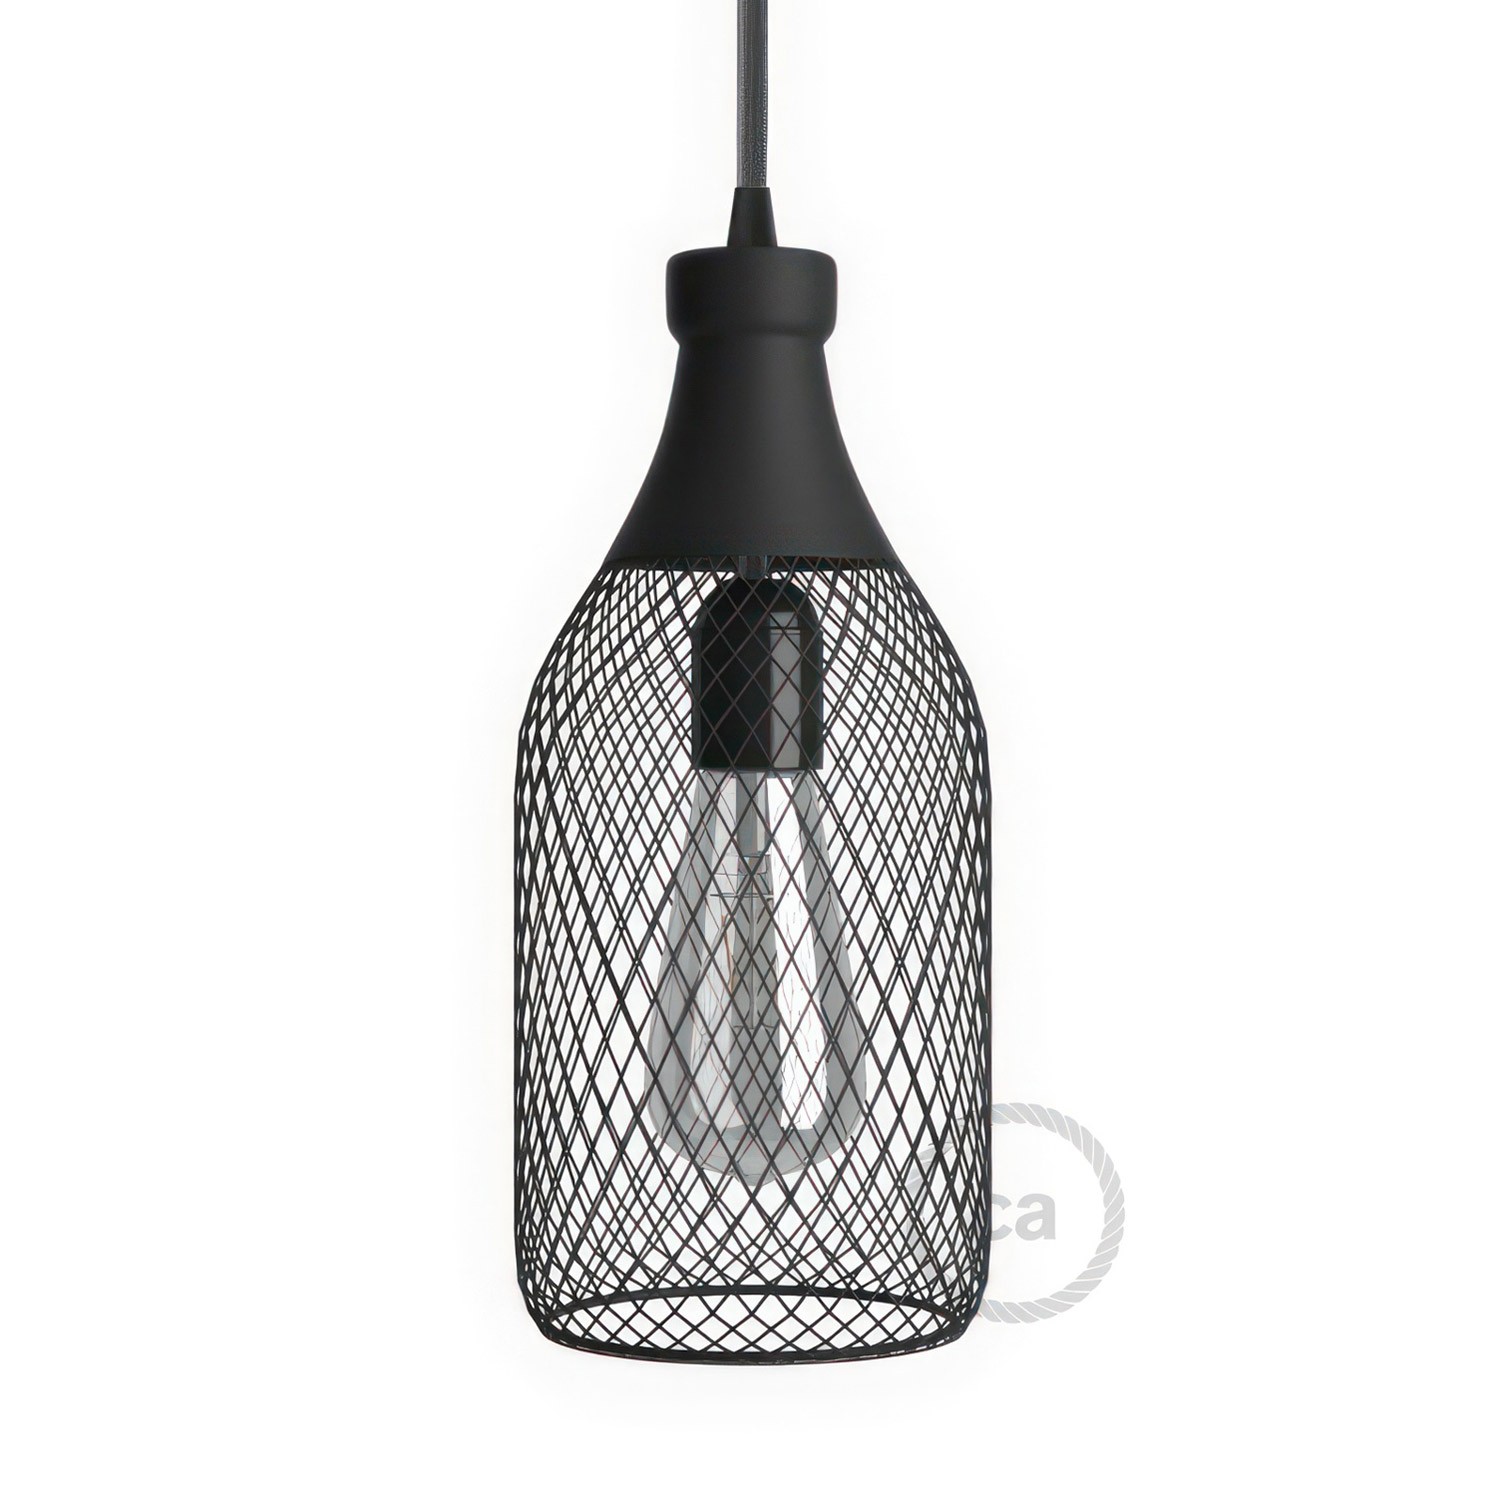 Bottle-shaped naked light bulb cage metal lampshade Jéroboam